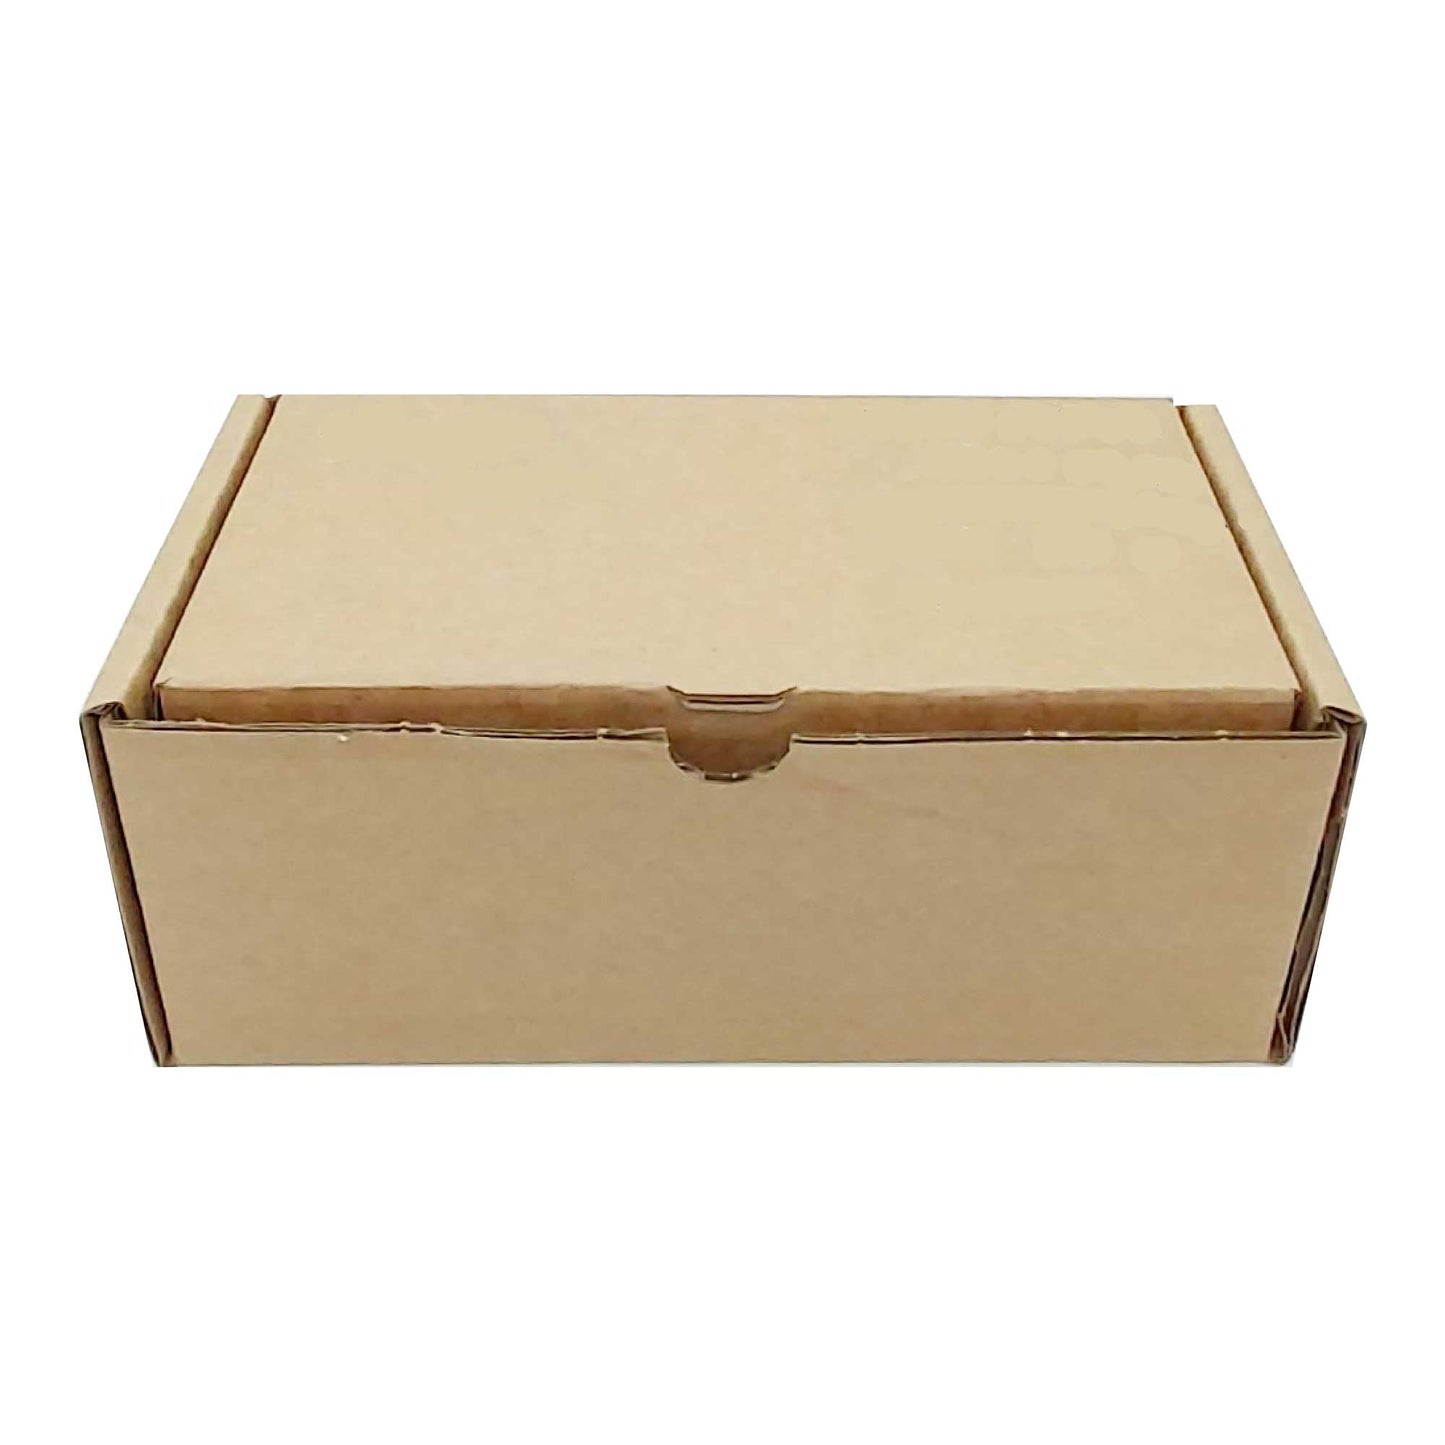 50x Mailing Box 190x100x80 Postal Brown Cardboard Small Diecut Shipping Carton